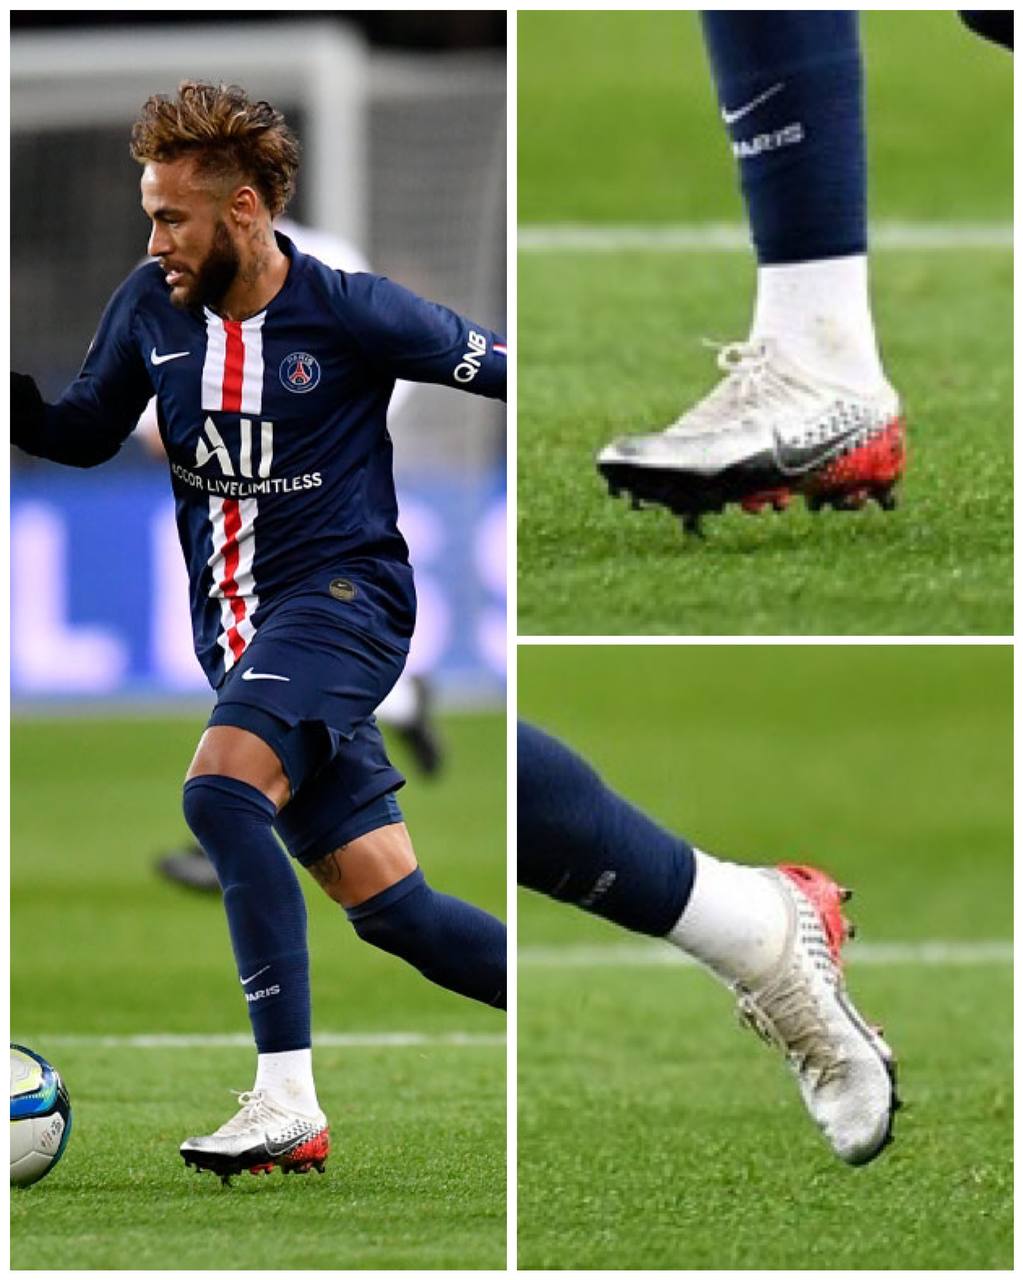 What Football Boots are Neymar Wearing? - Boot History - Vapor XII - NJR Speed Freak